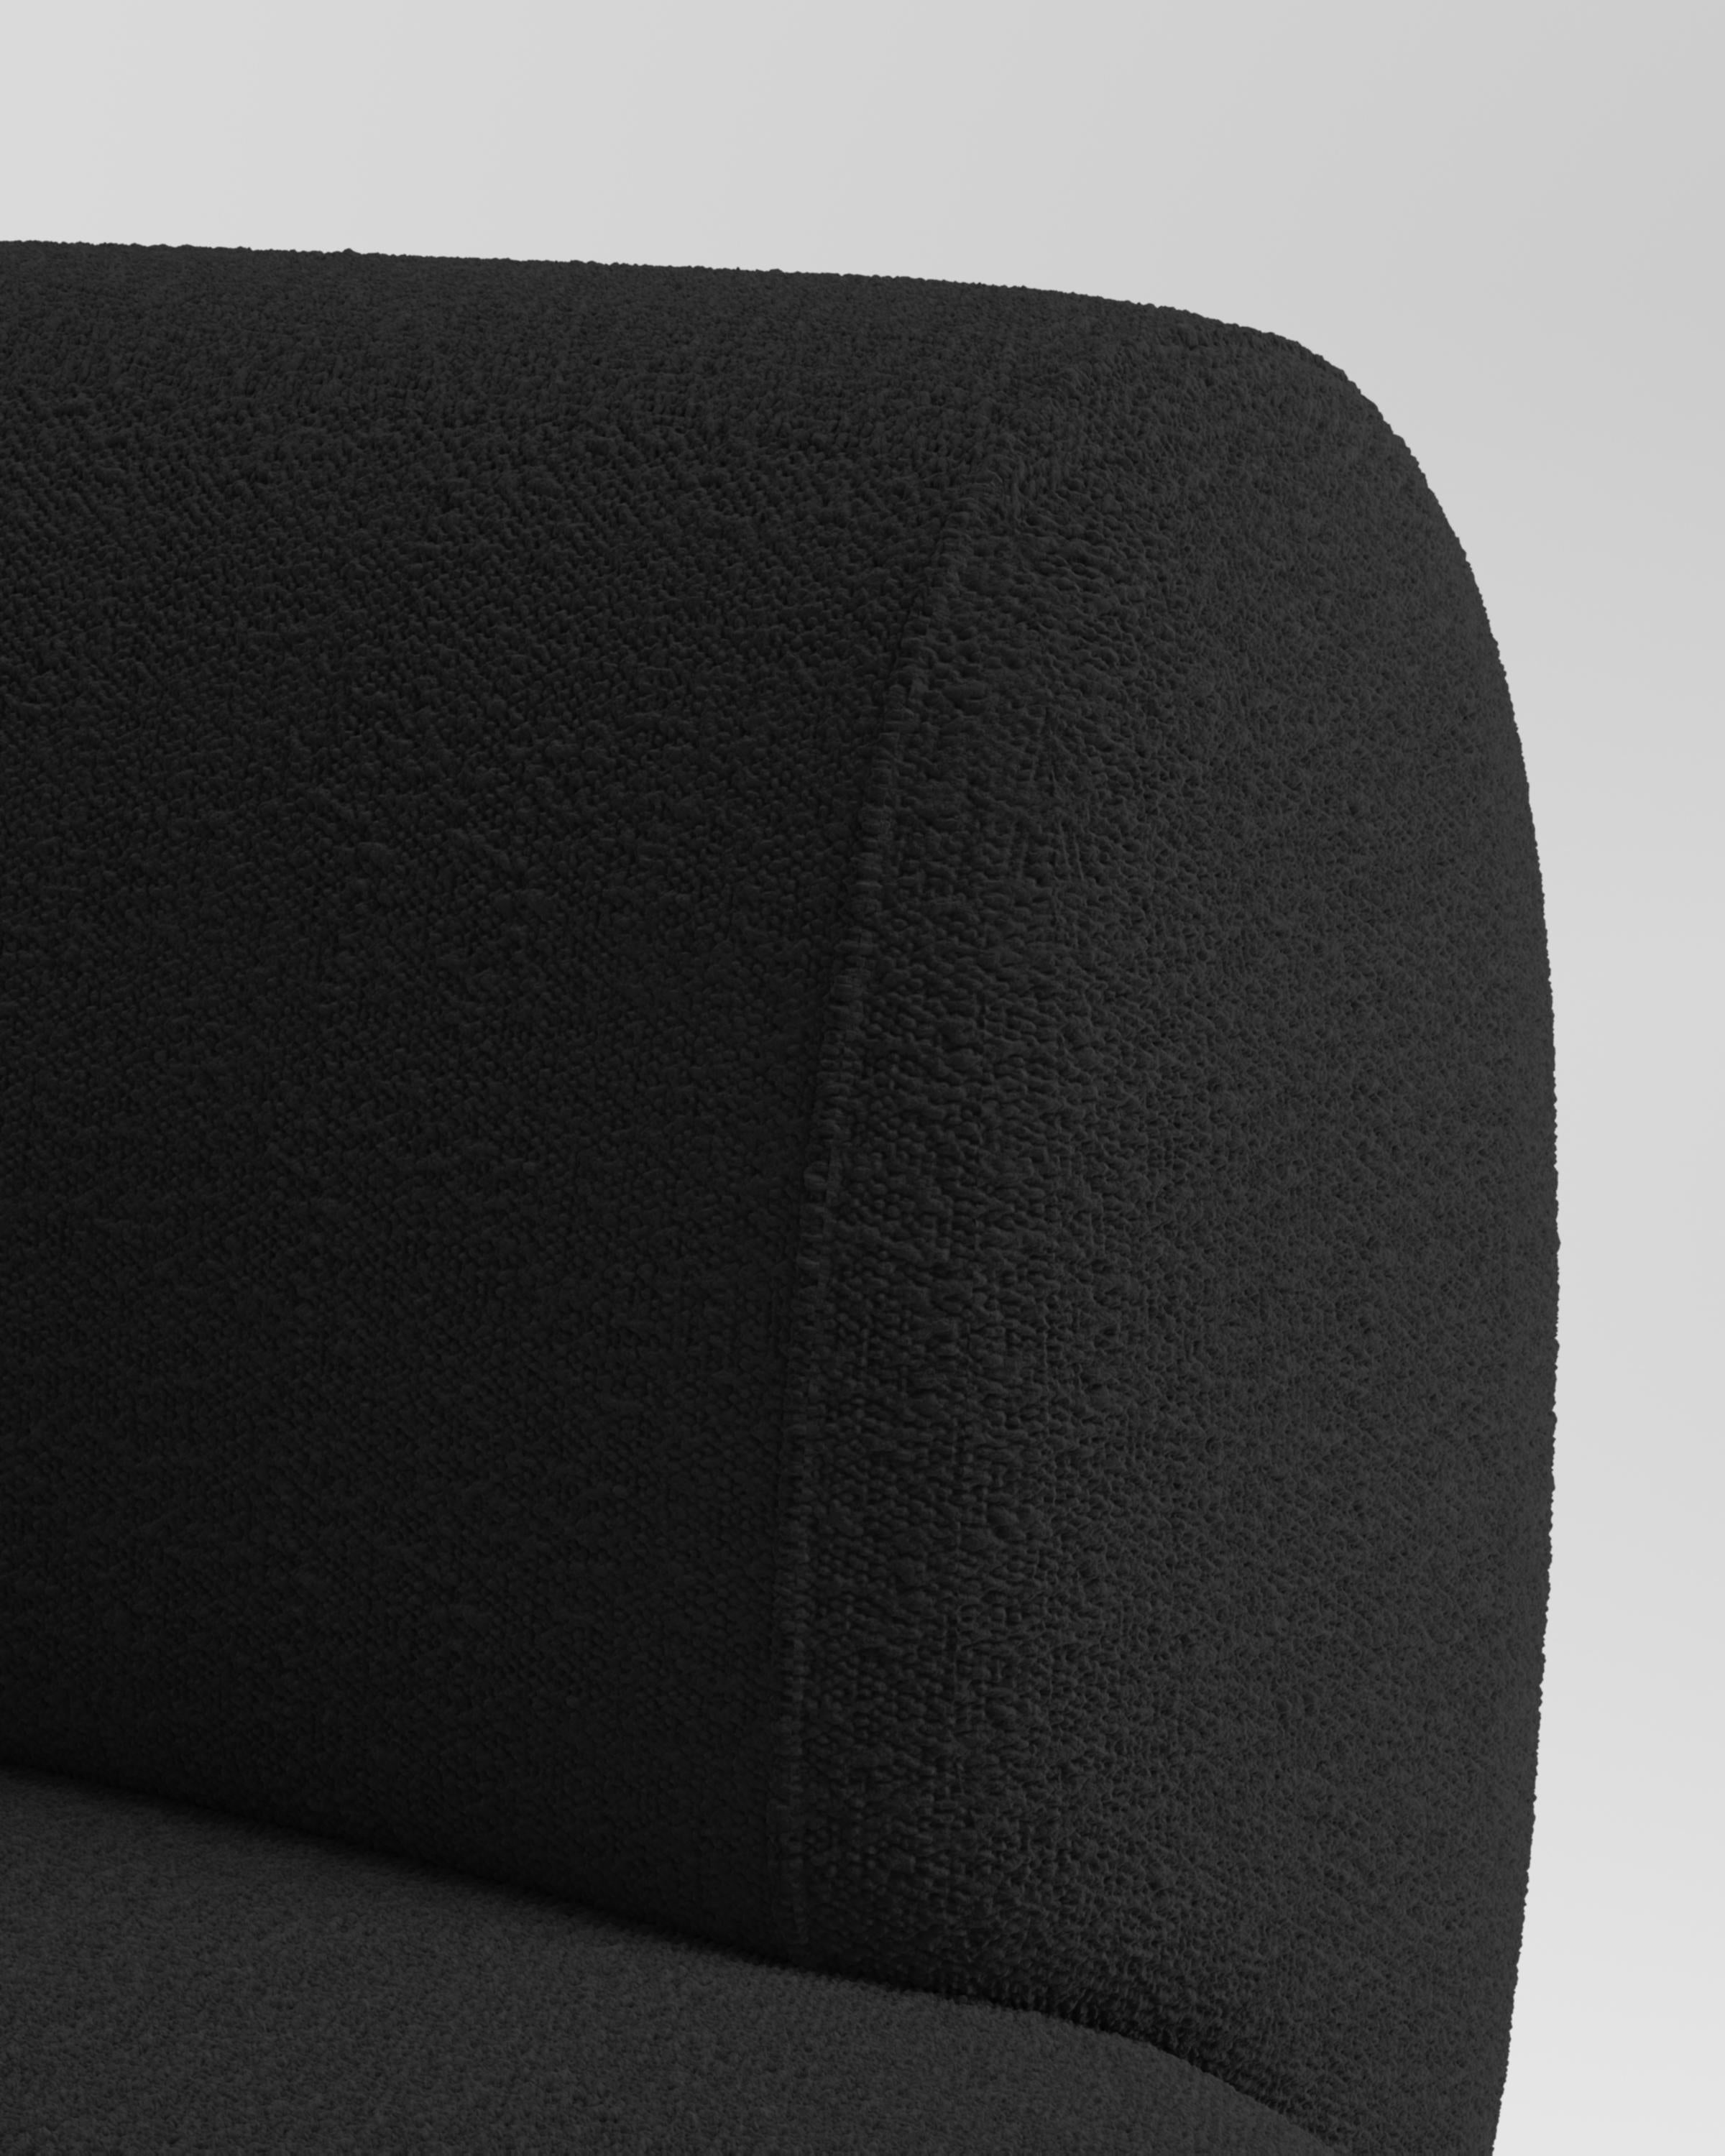 Collector Hug Sofa Designed by Ferrianisbolgi Fabric Bouclé Black In New Condition For Sale In Castelo da Maia, PT